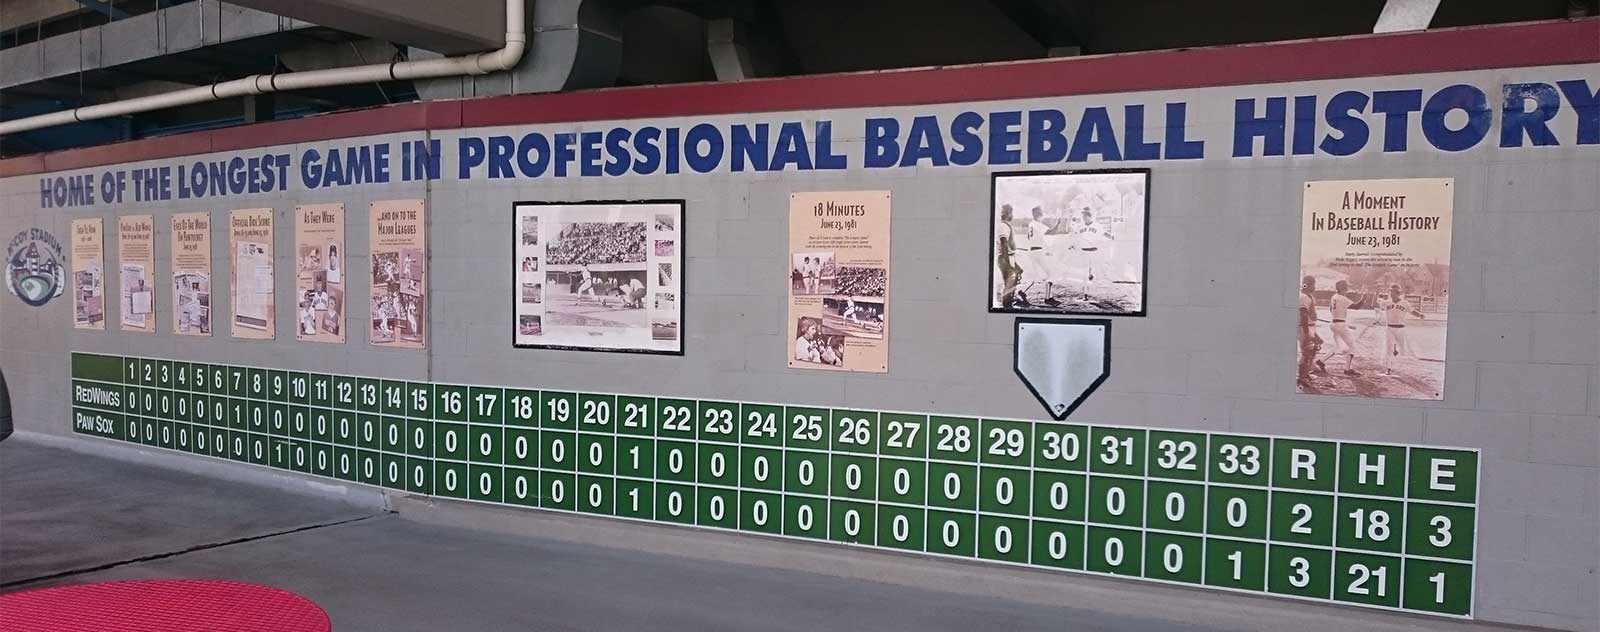 records historiques baseball profesionnel